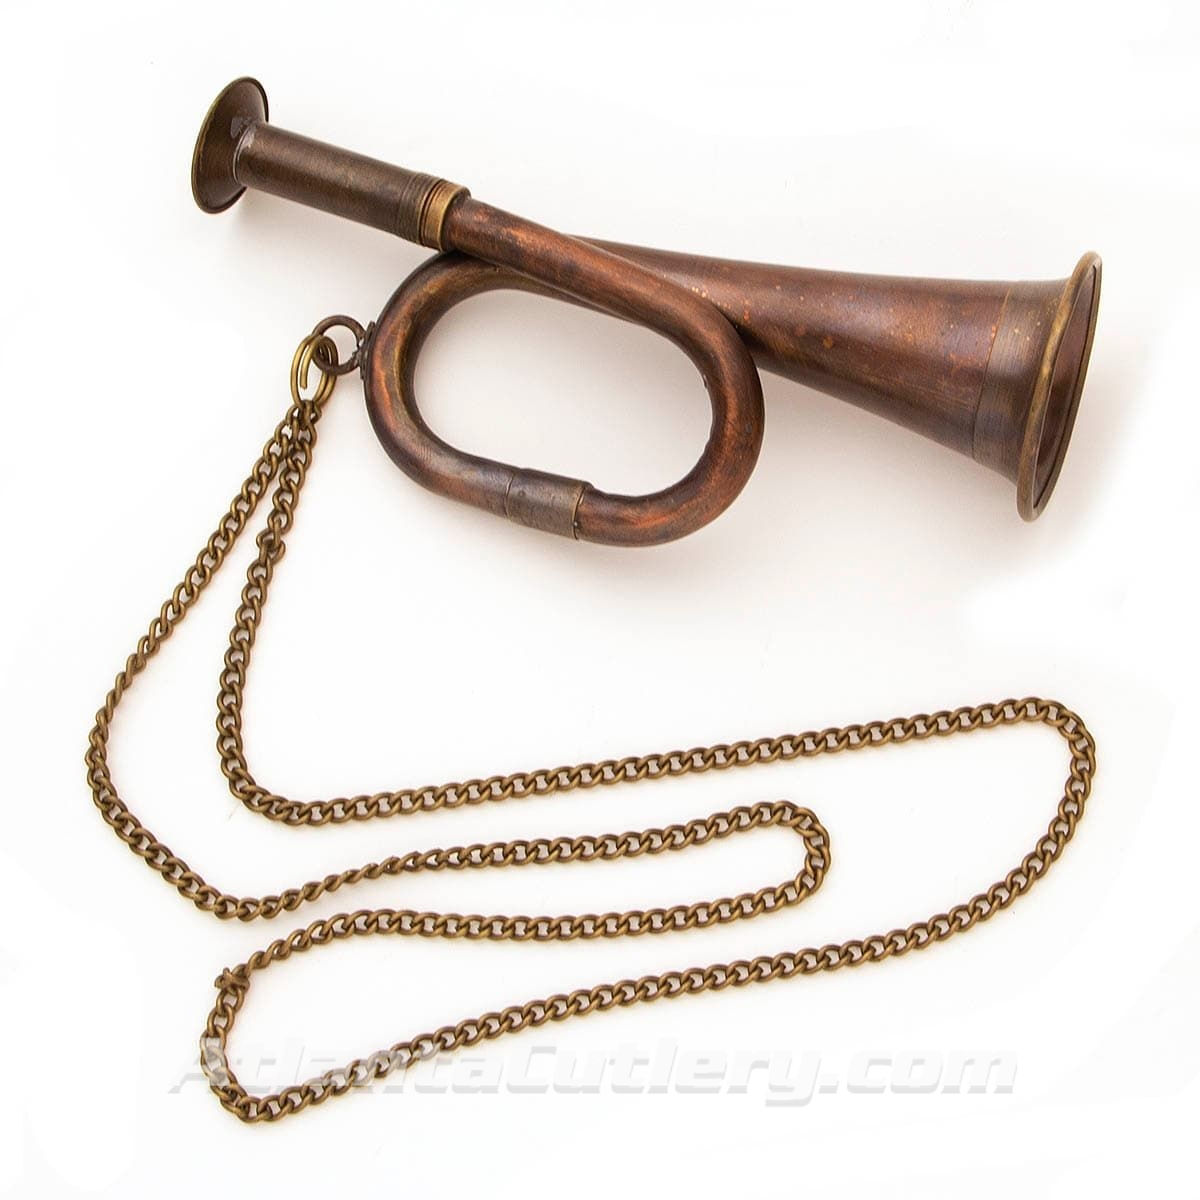 Miniature Working Brass Bugle with Chain